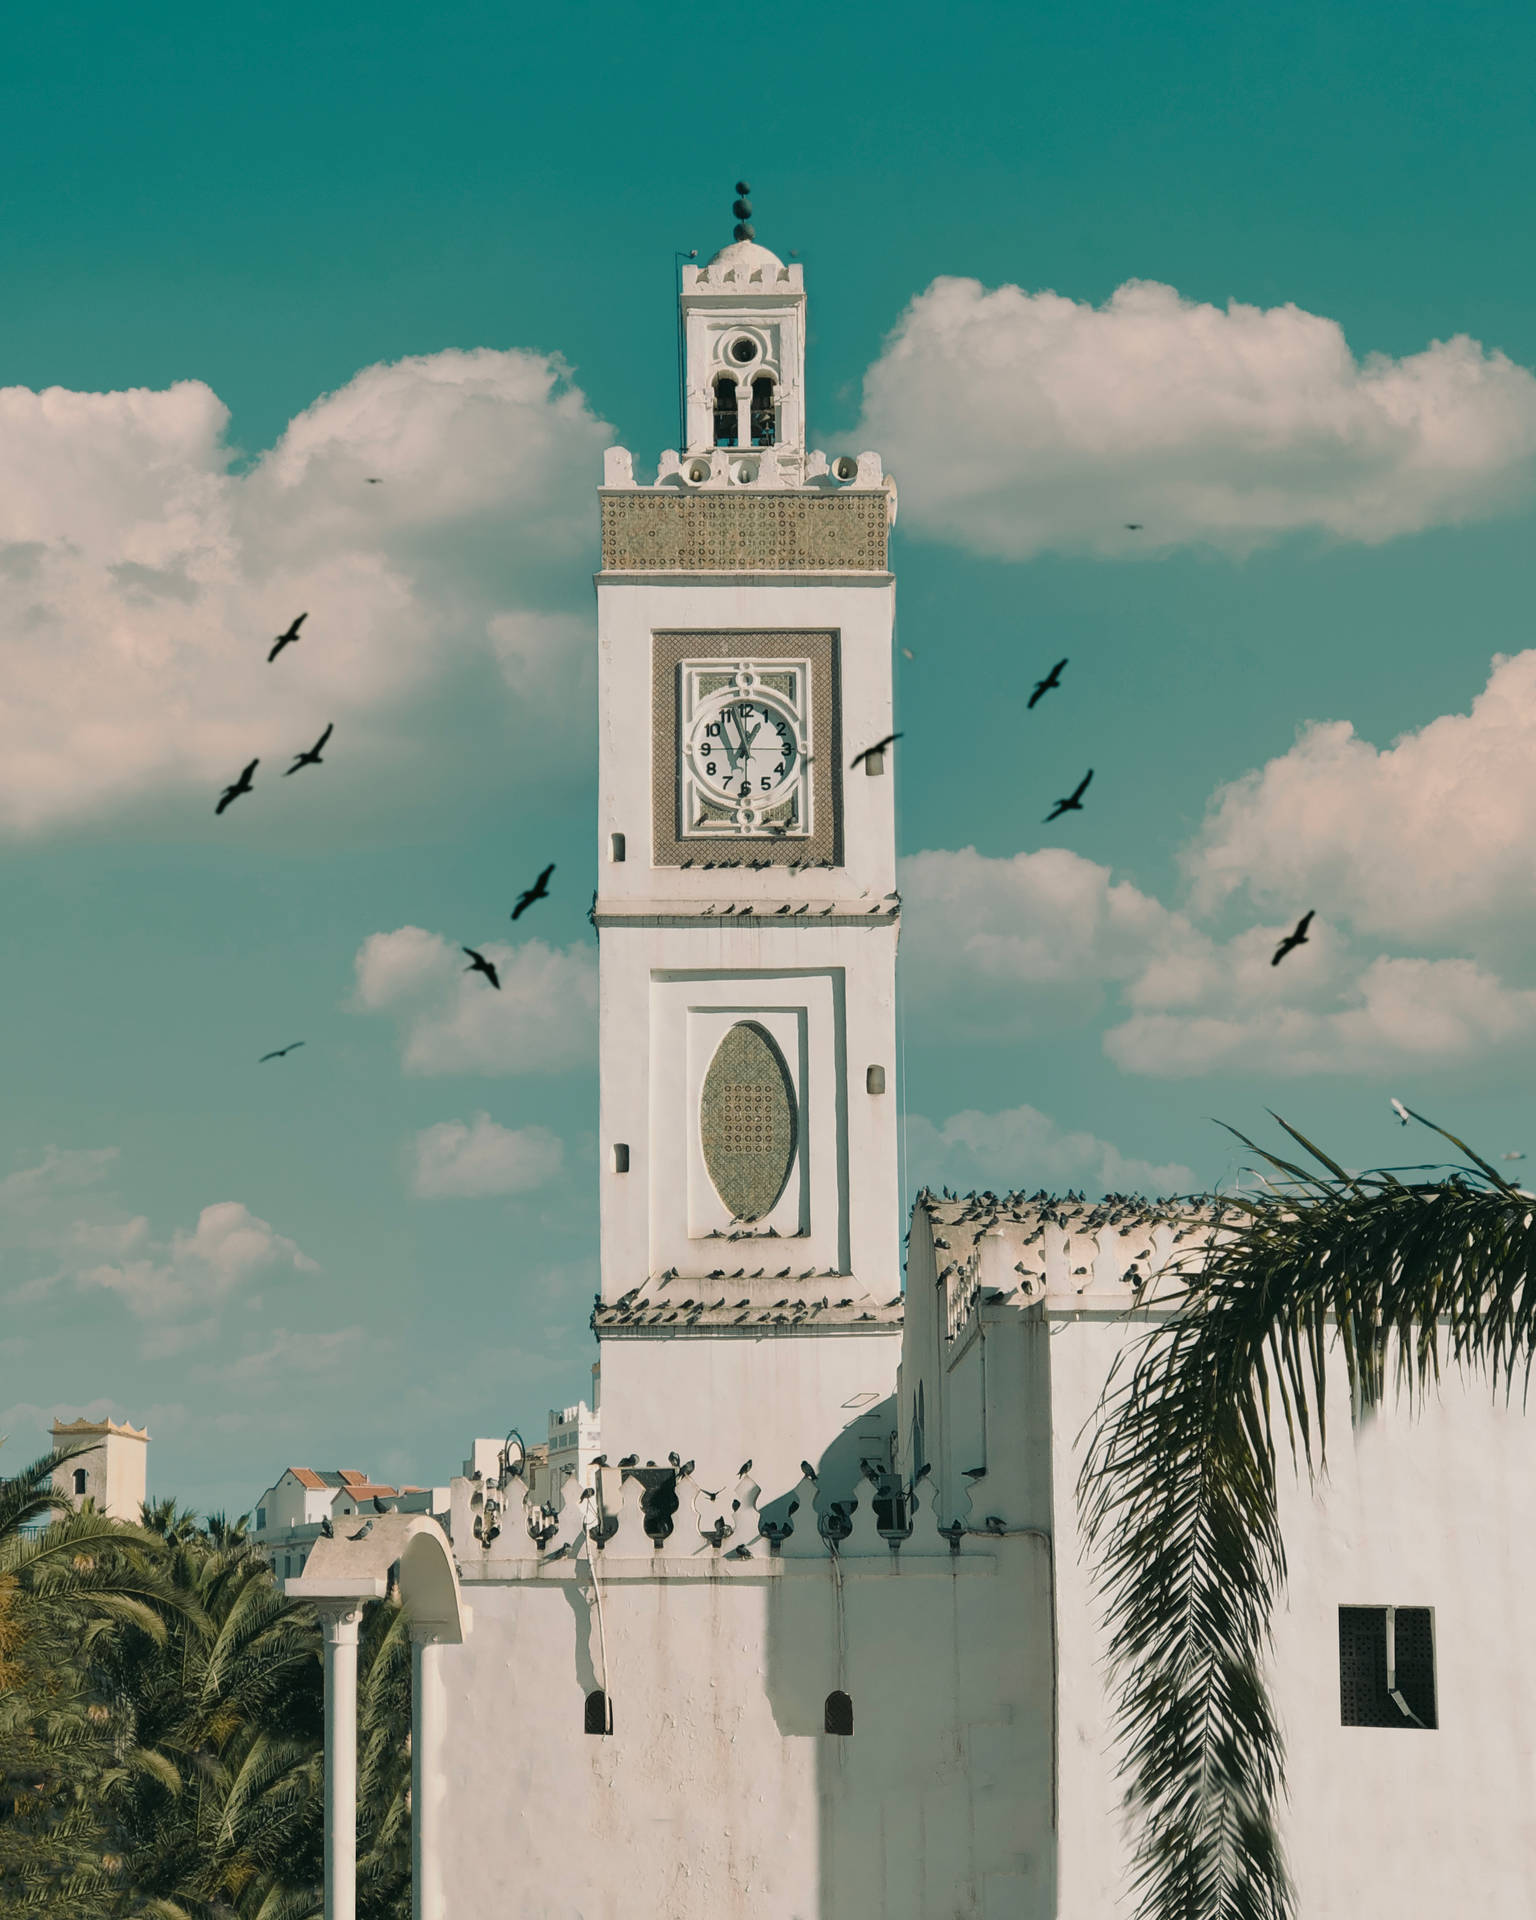 Algeria Building With Birds Background